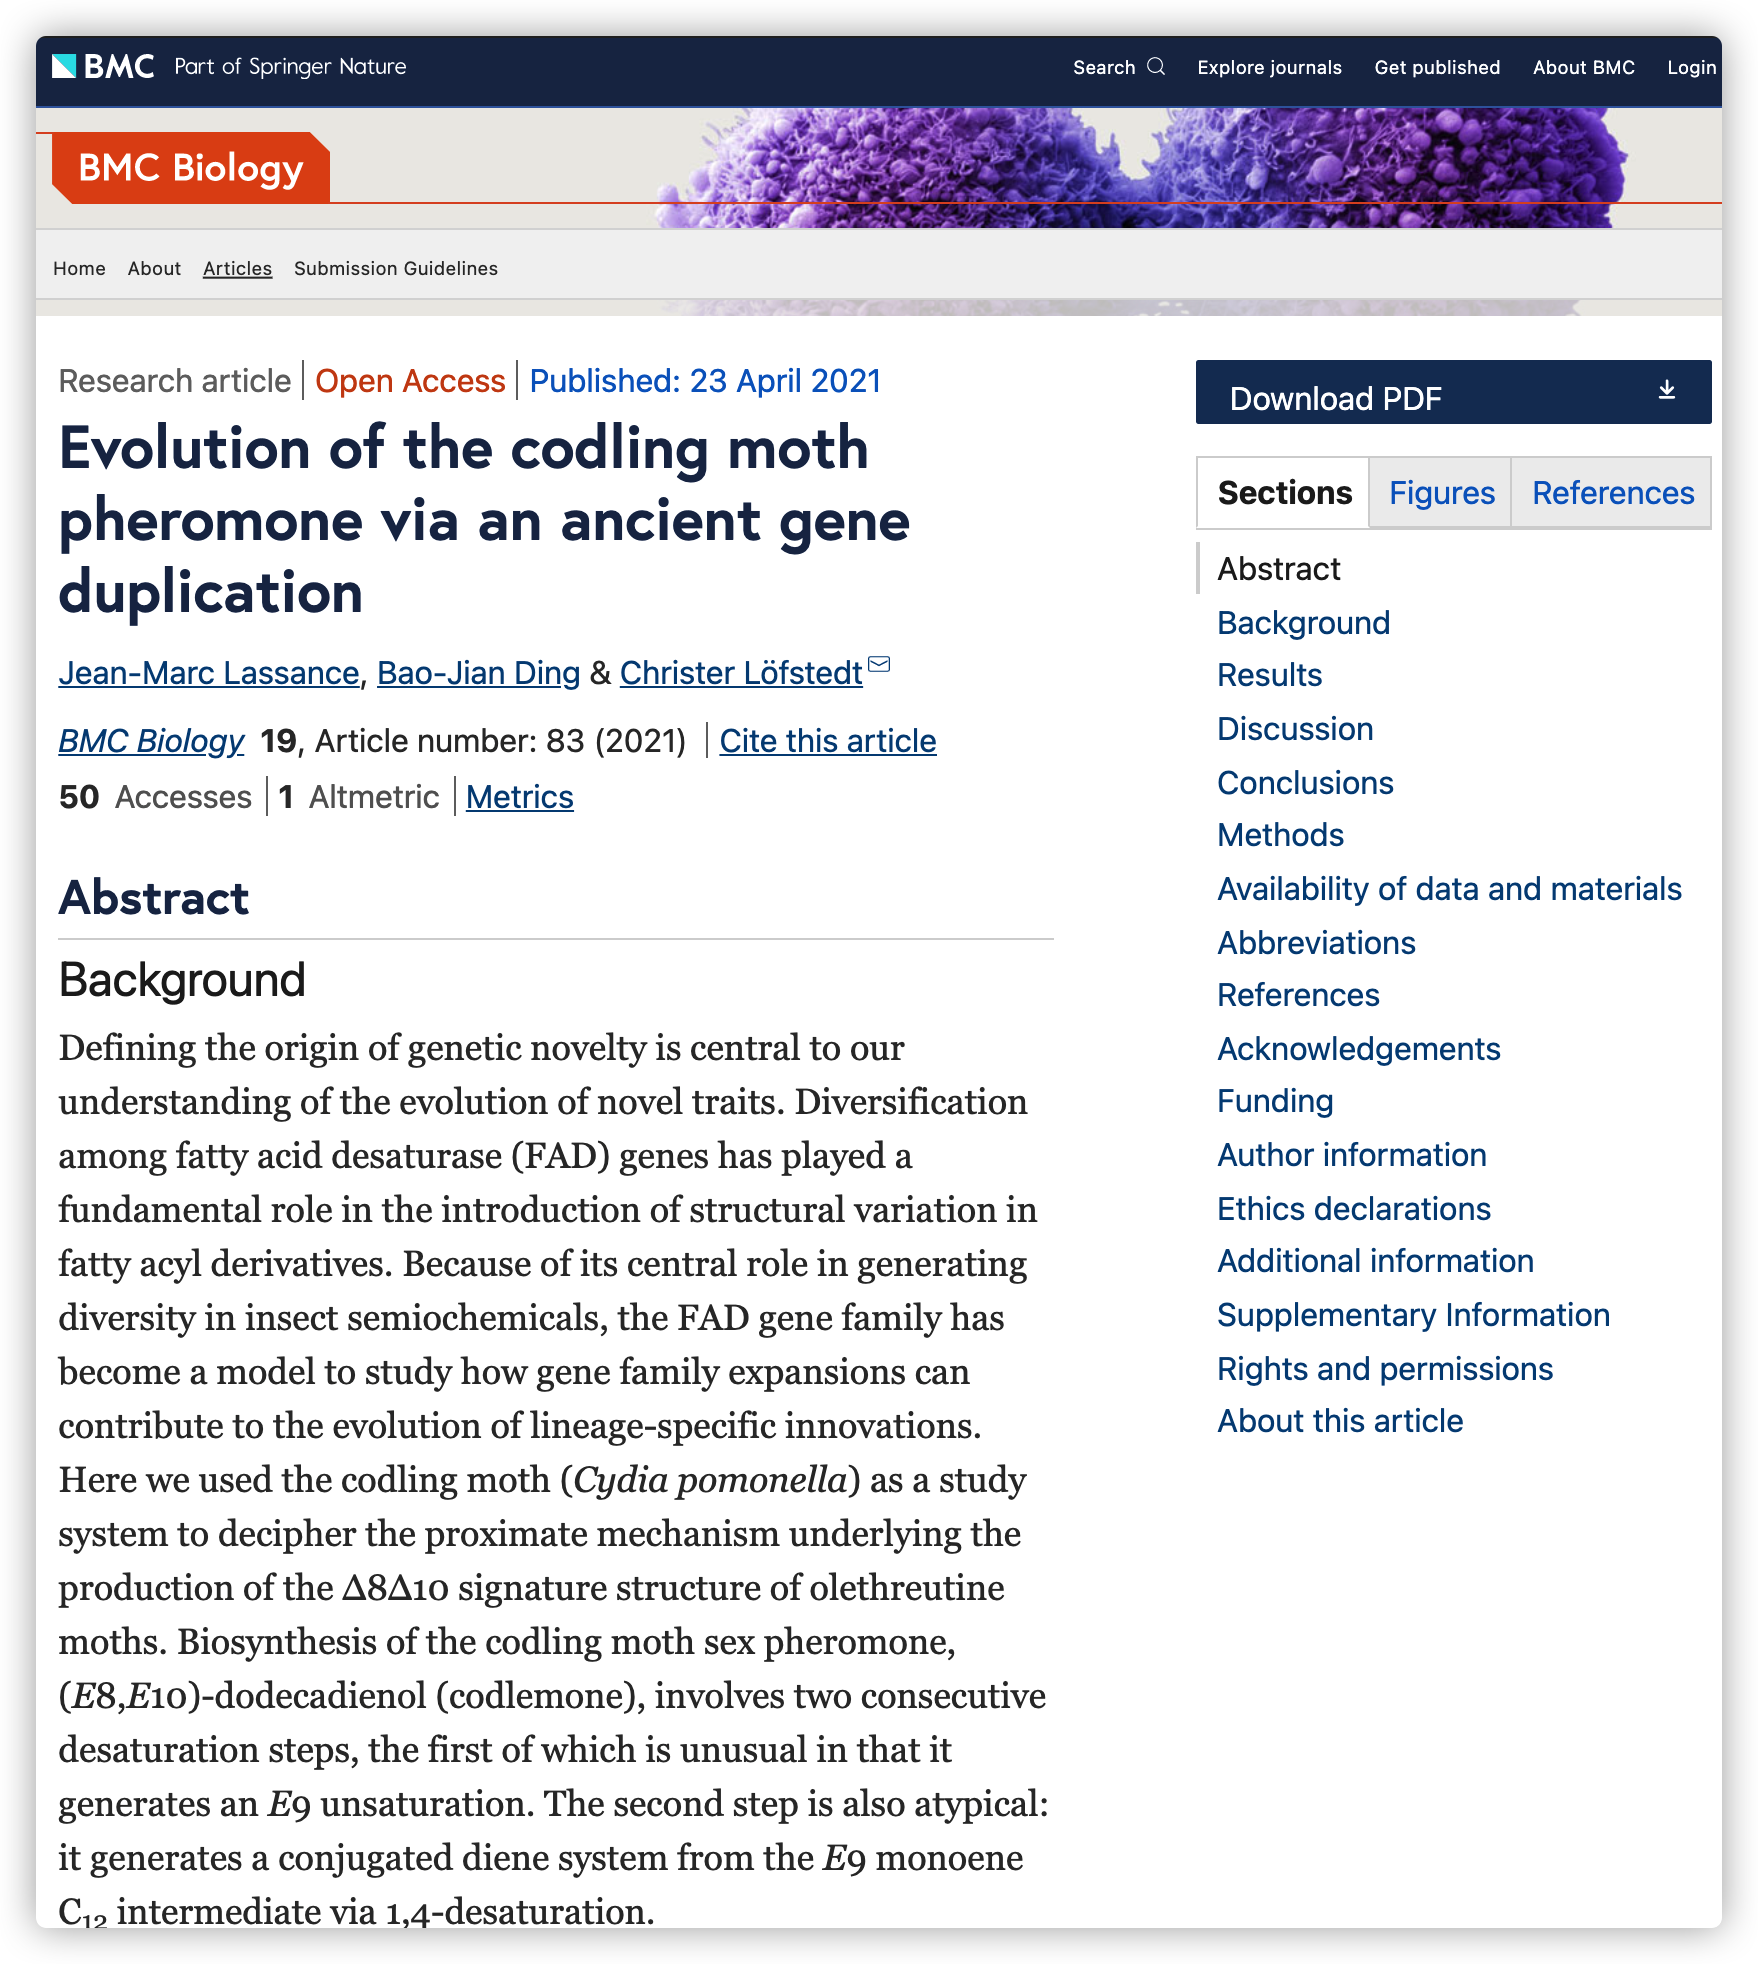 Evolution of the codling moth pheromone via an ancient gene duplication